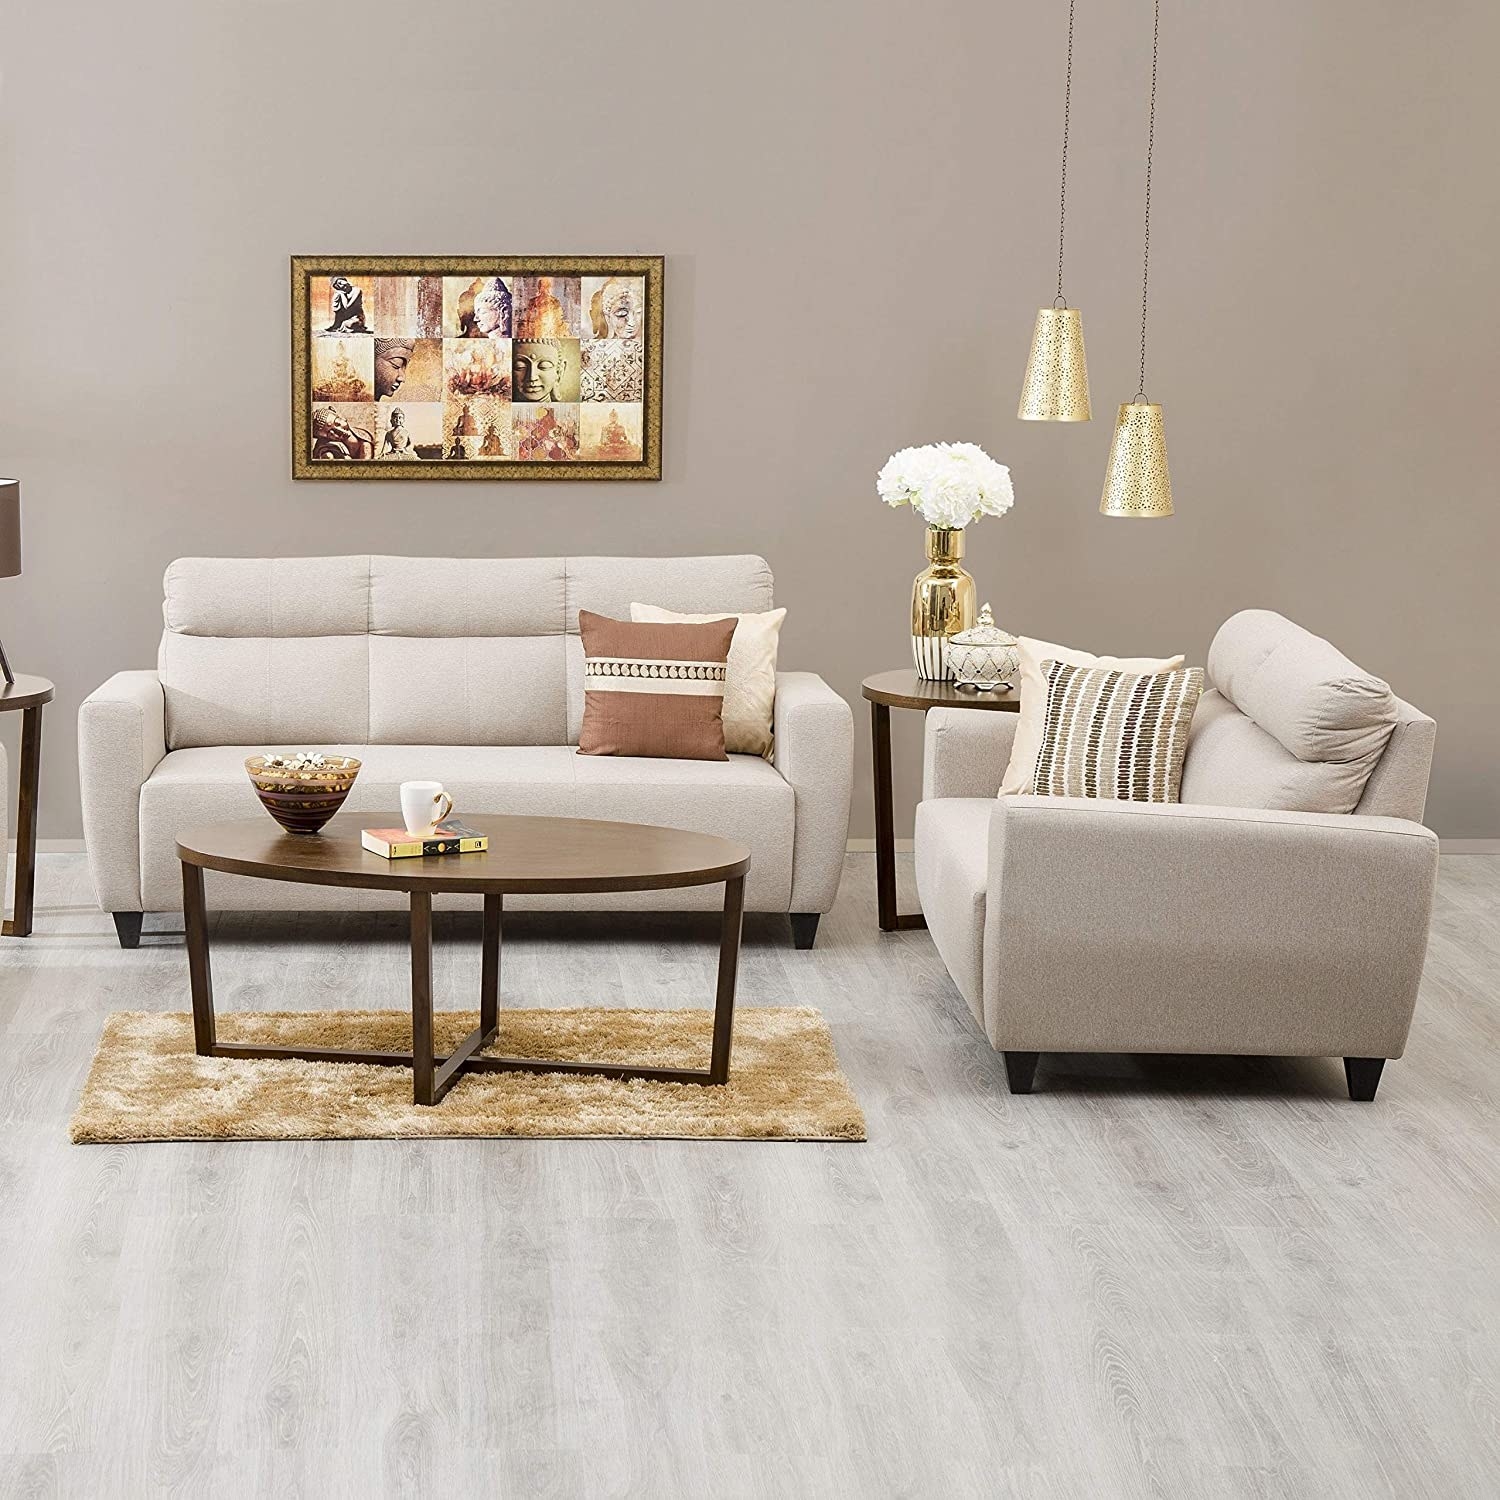 A beige sofa set